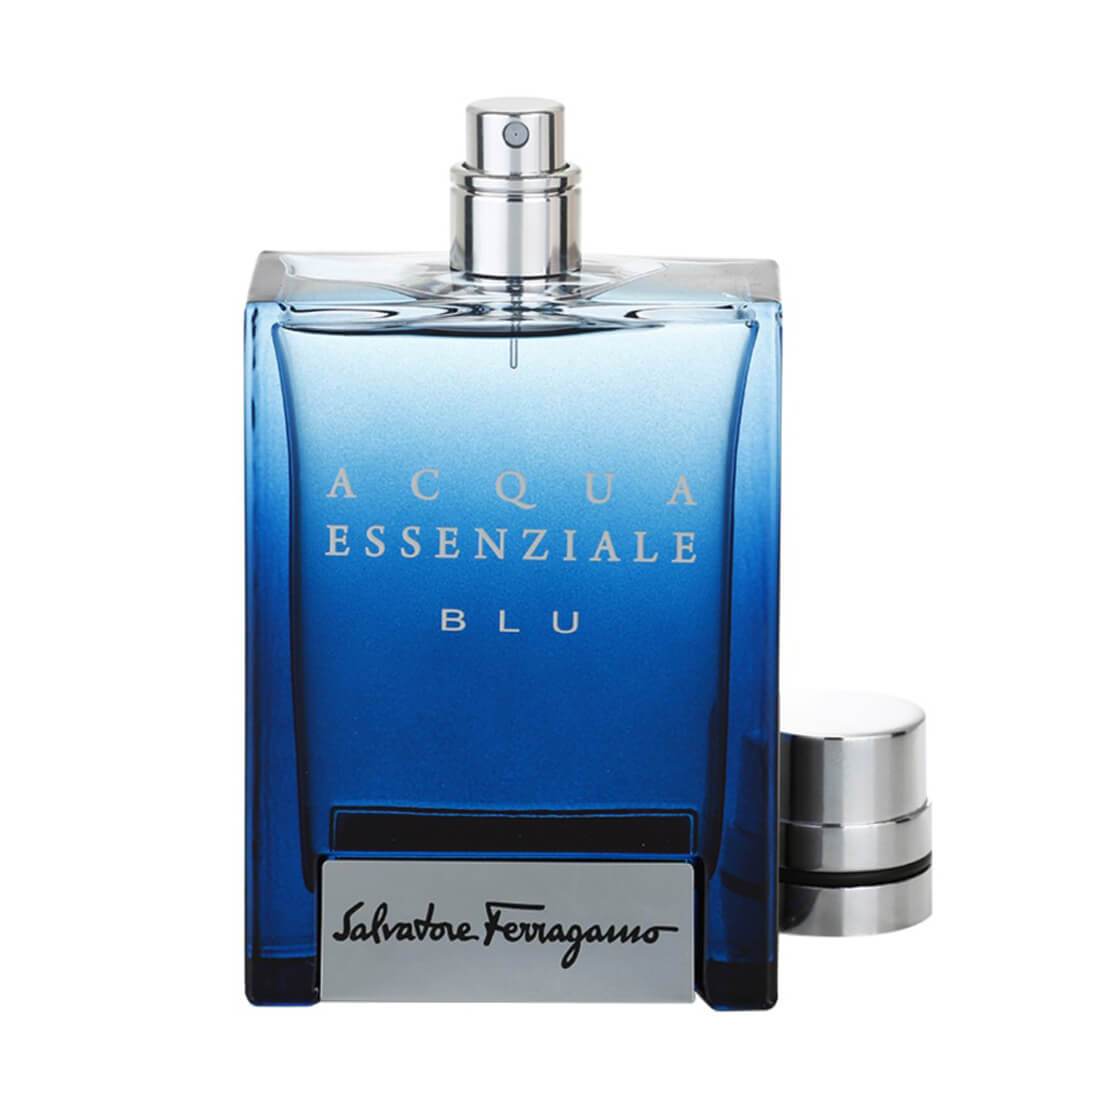 Salvatore Ferragamo Acqua Essenziale Blu EDT Perfume - 100ml